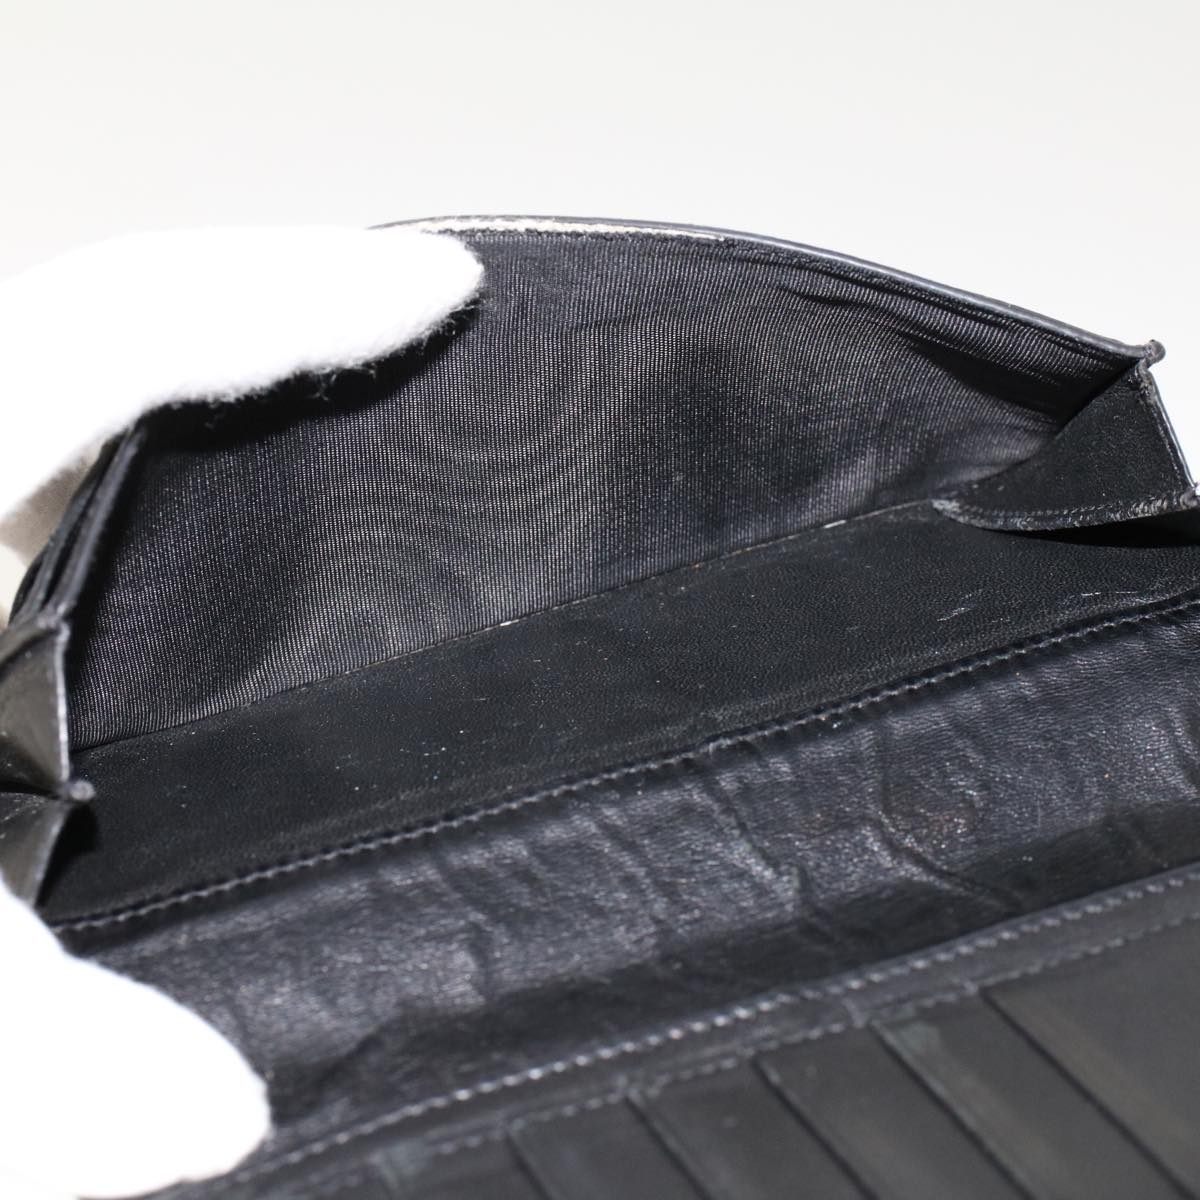 SAINT LAURENT Long Wallet Leather Patent leather 3Set Black Green Auth bs6091